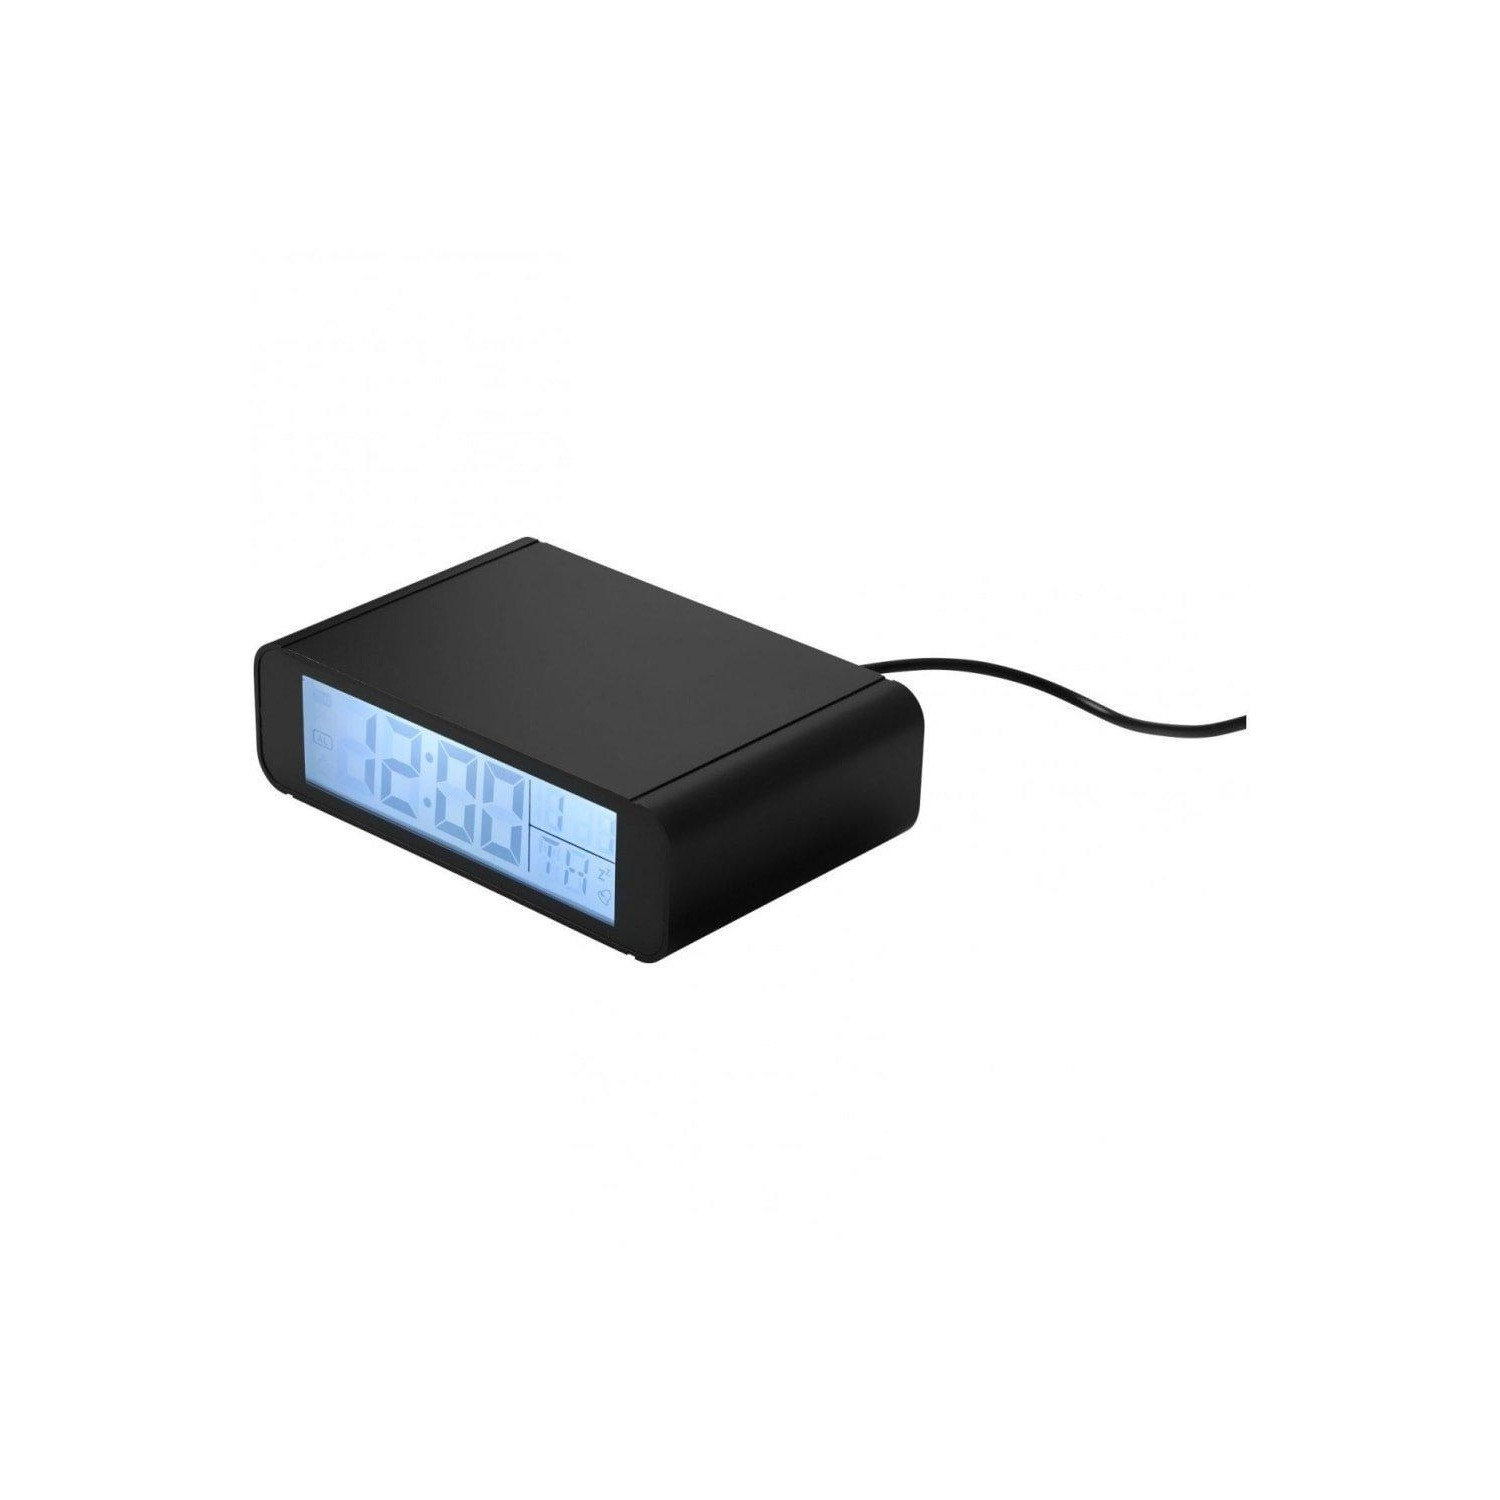 Digital Alarm Clock - image 1